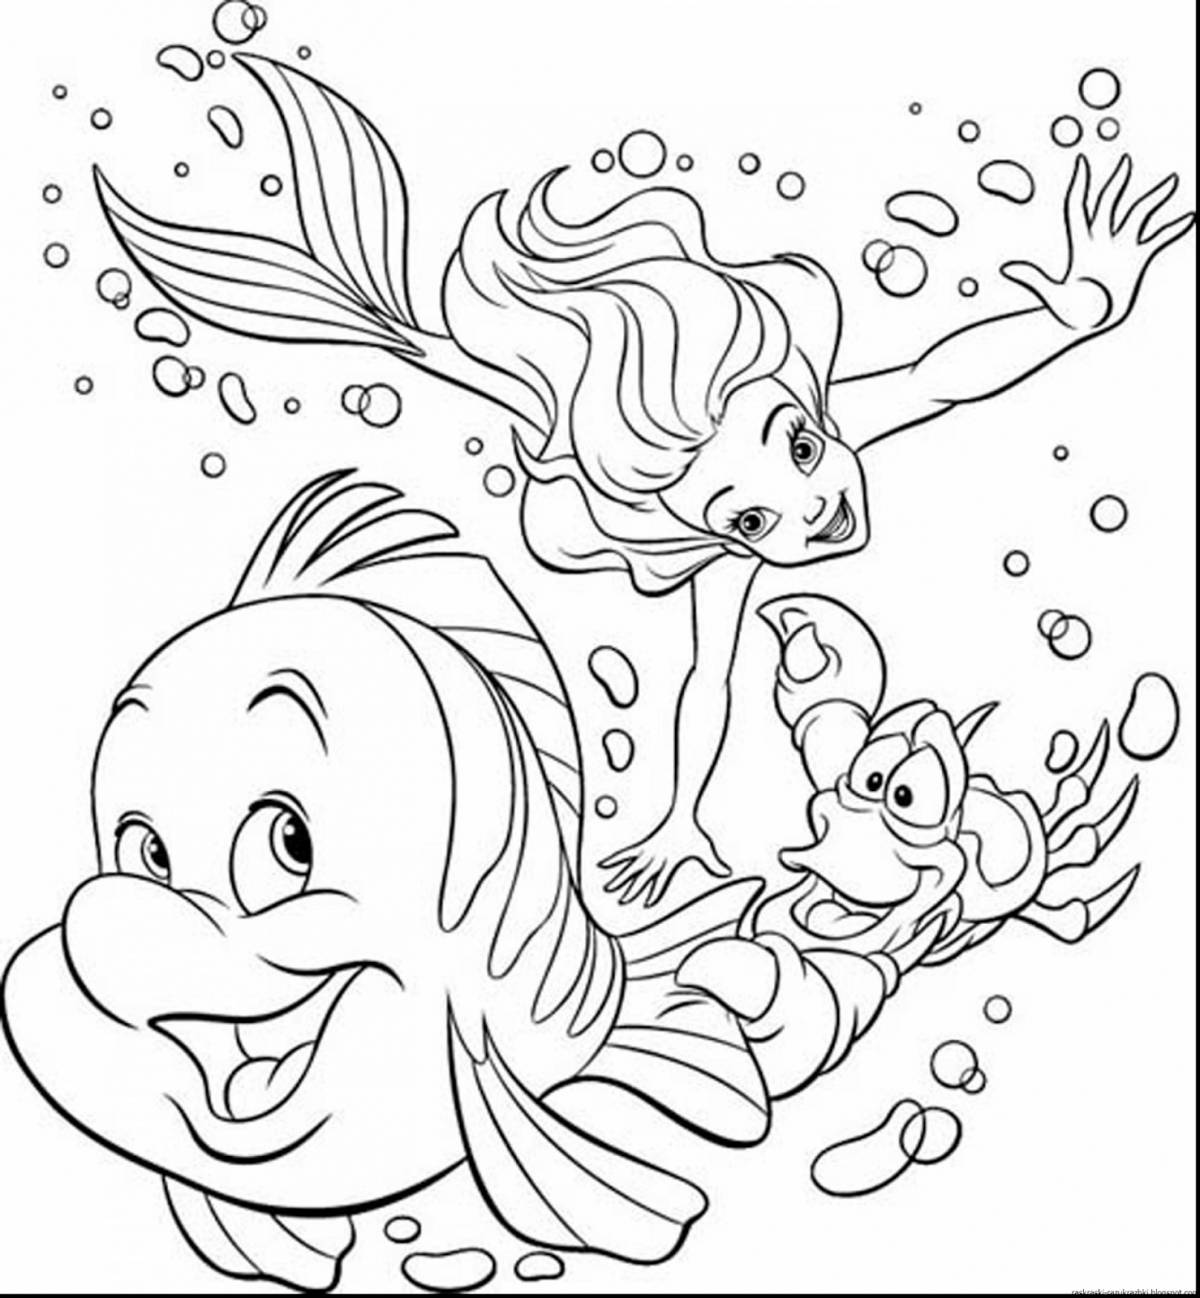 Violent mermaid coloring page